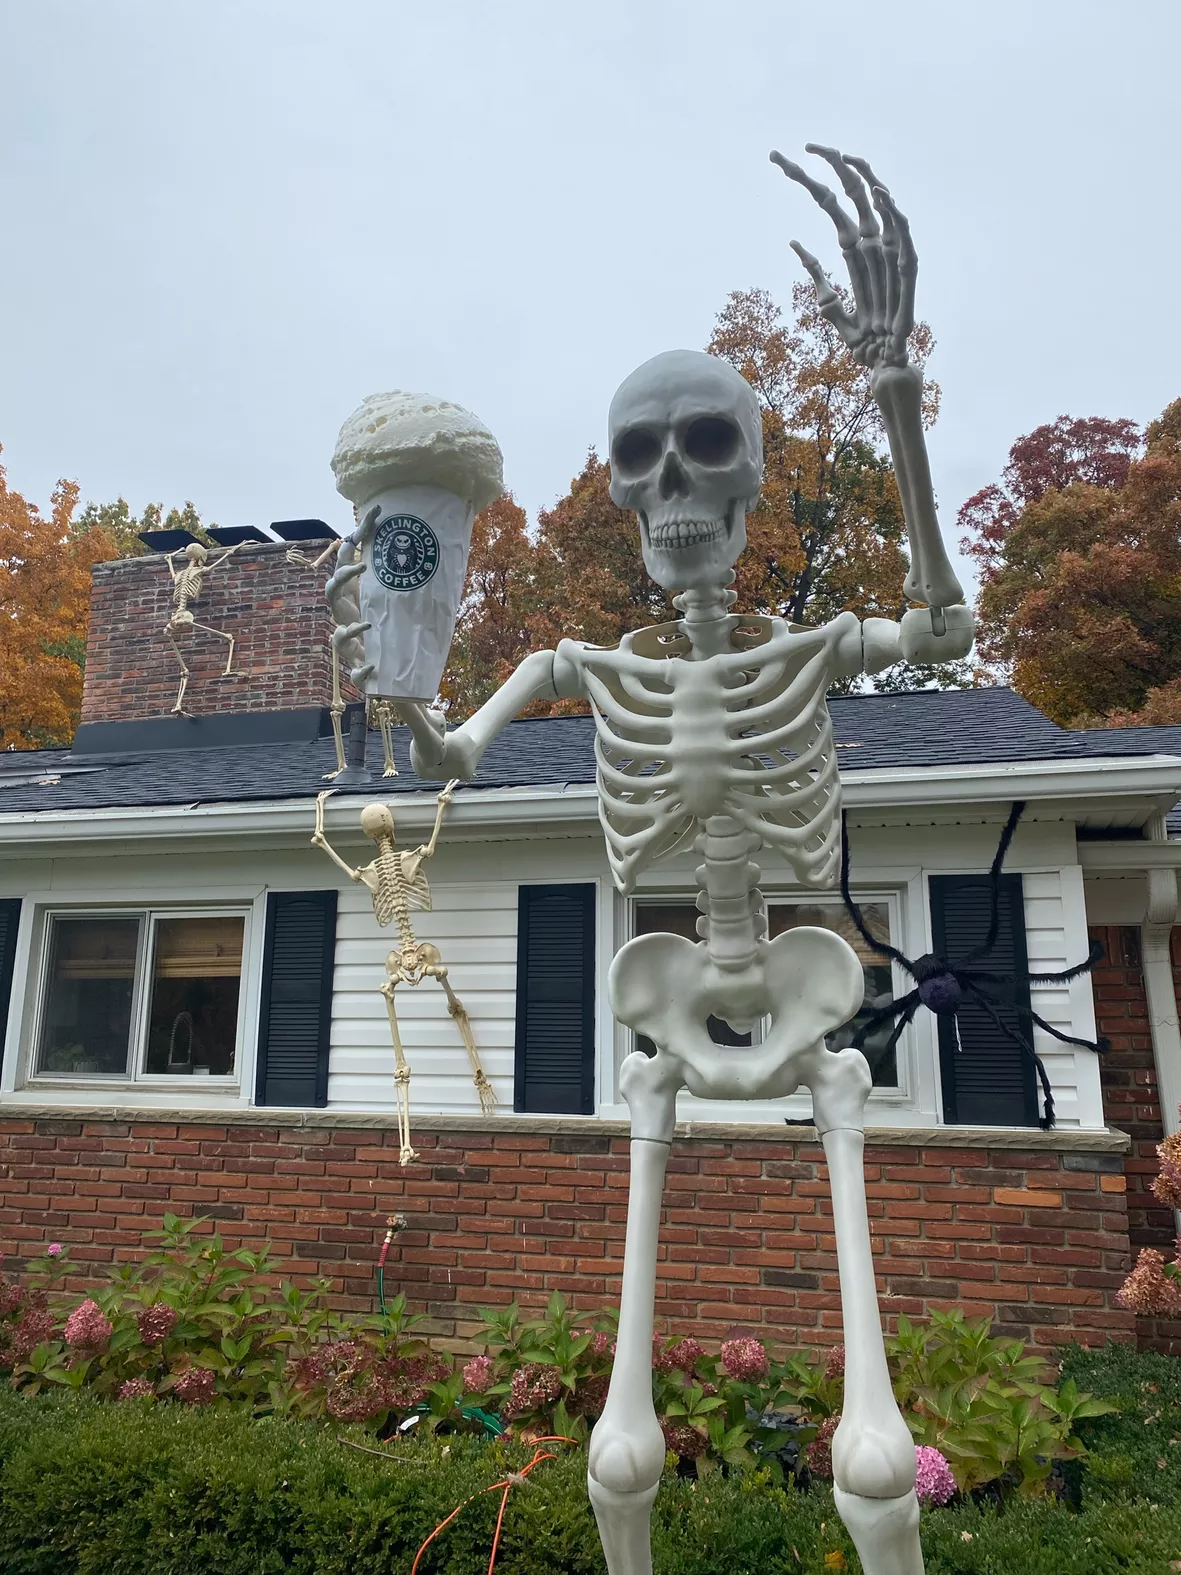 Giant skeleton halloween decoration - .de